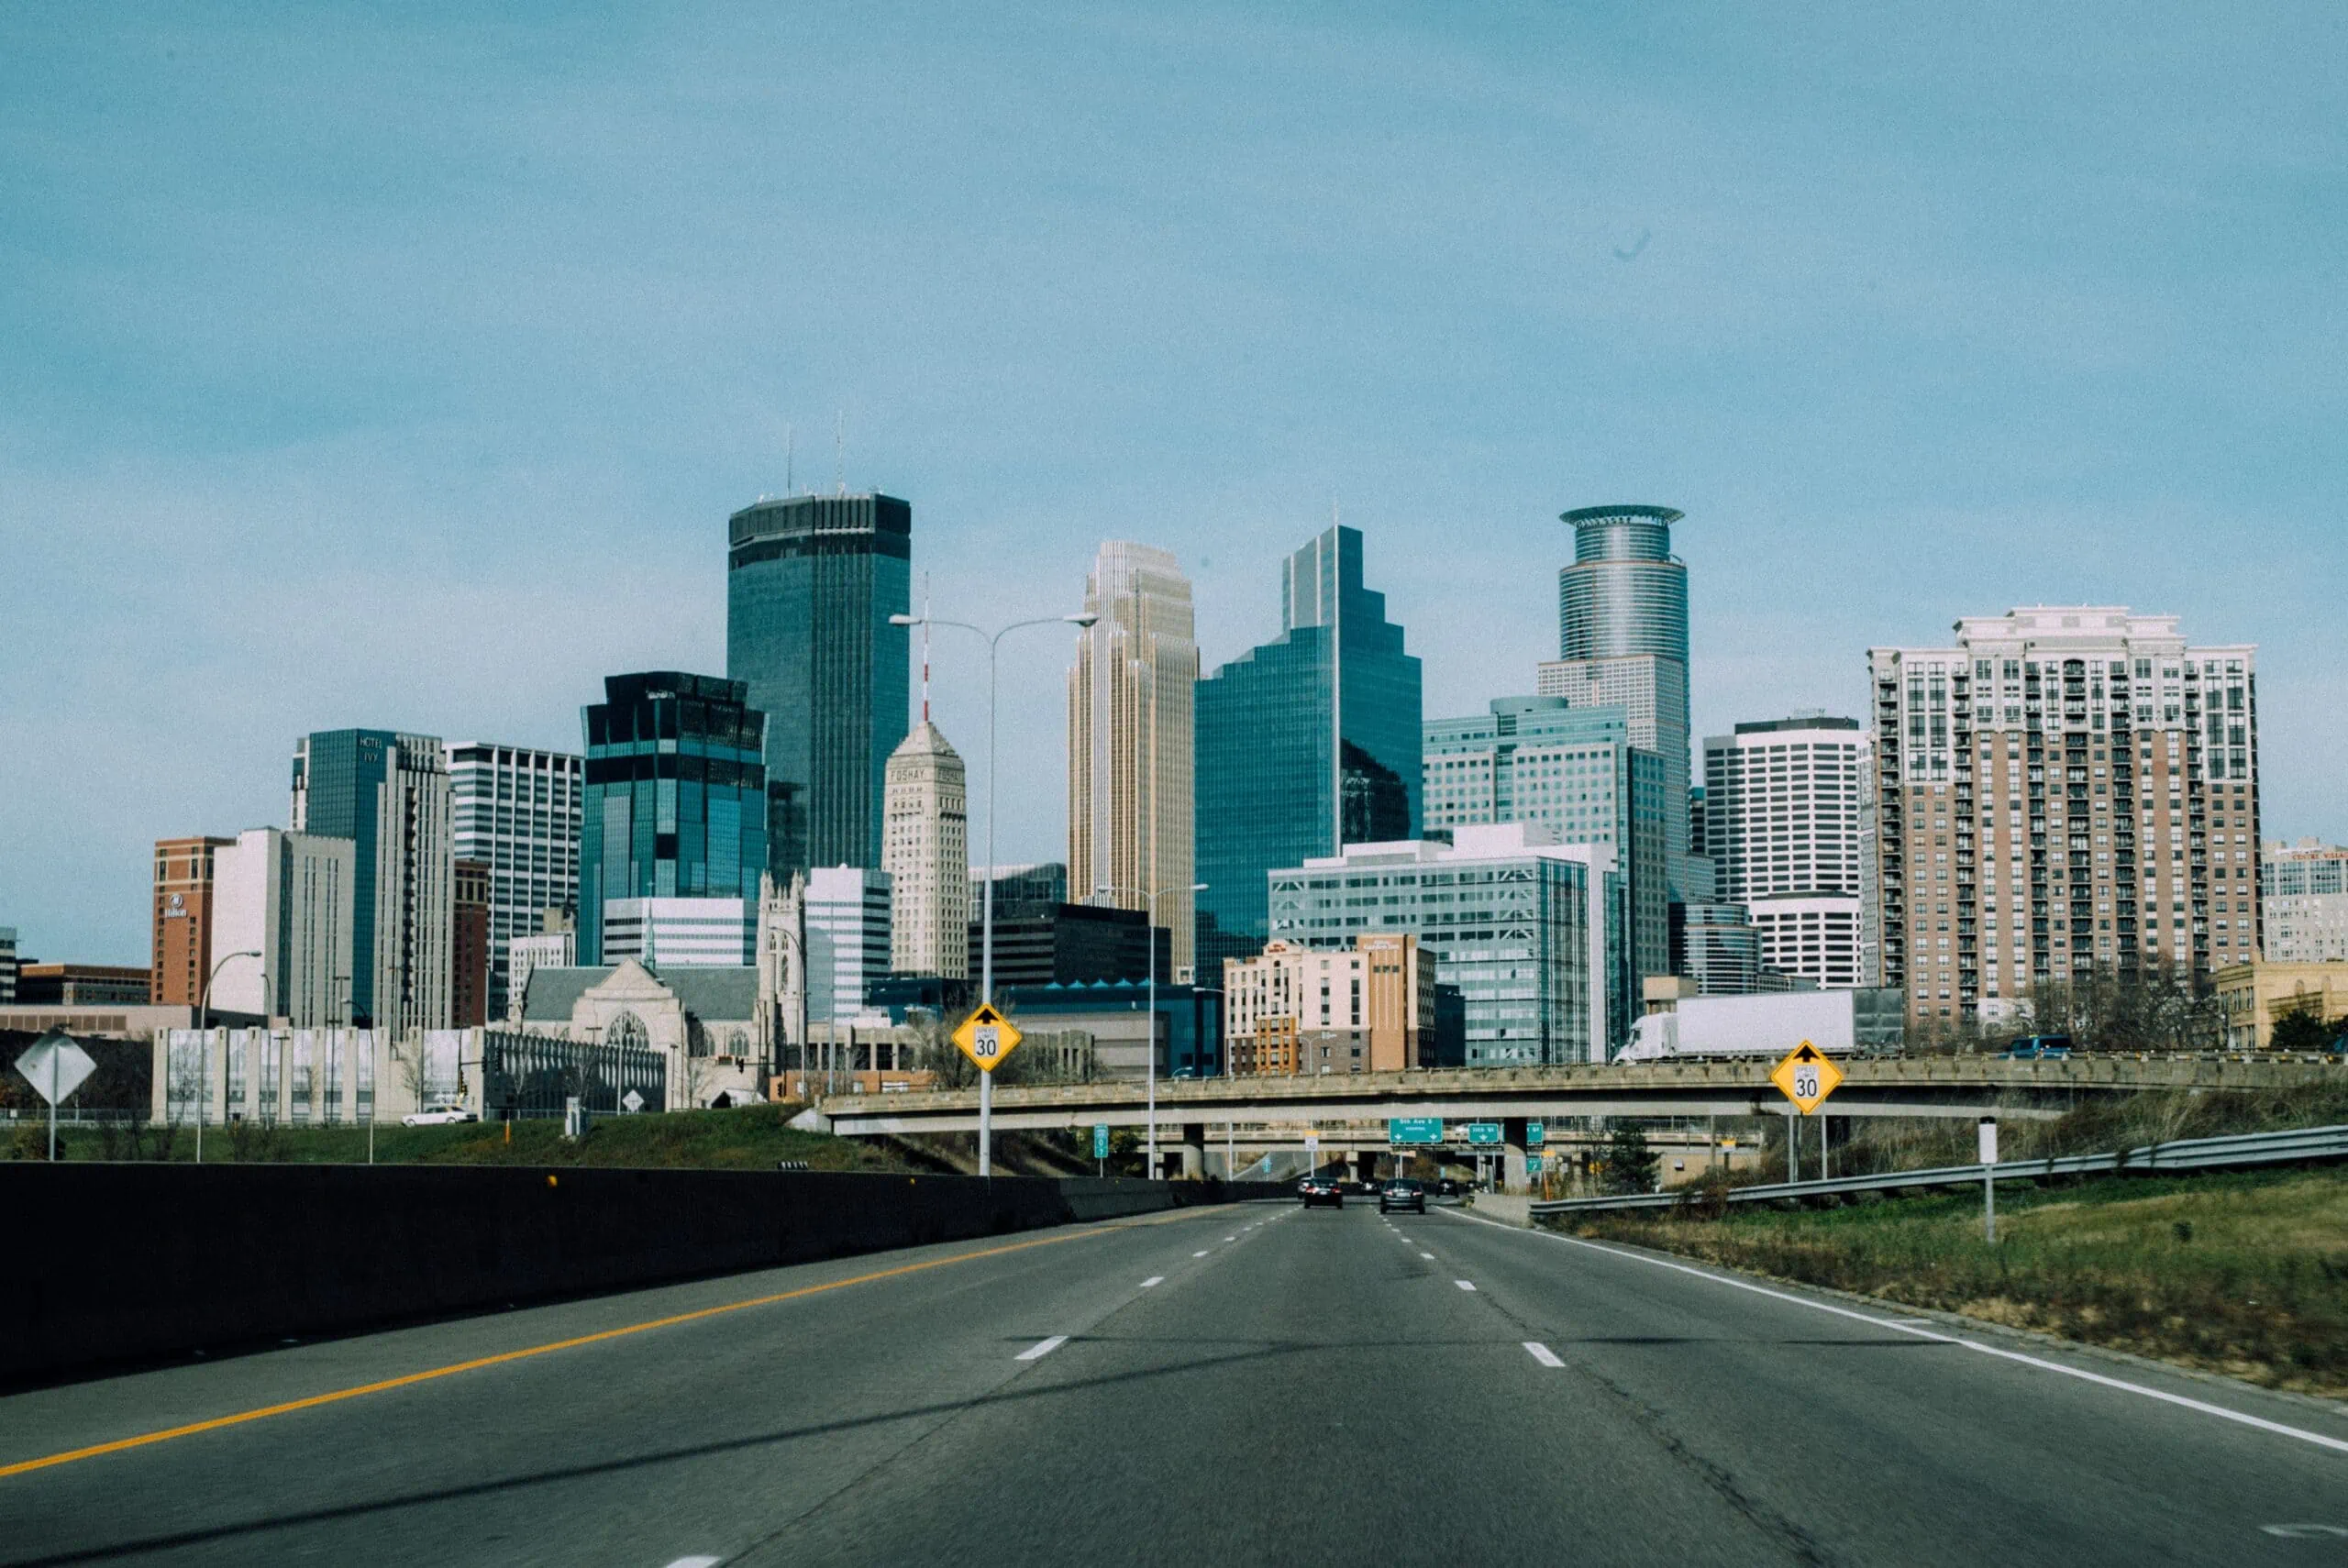 Skyline of Minneapolis that has city camera system